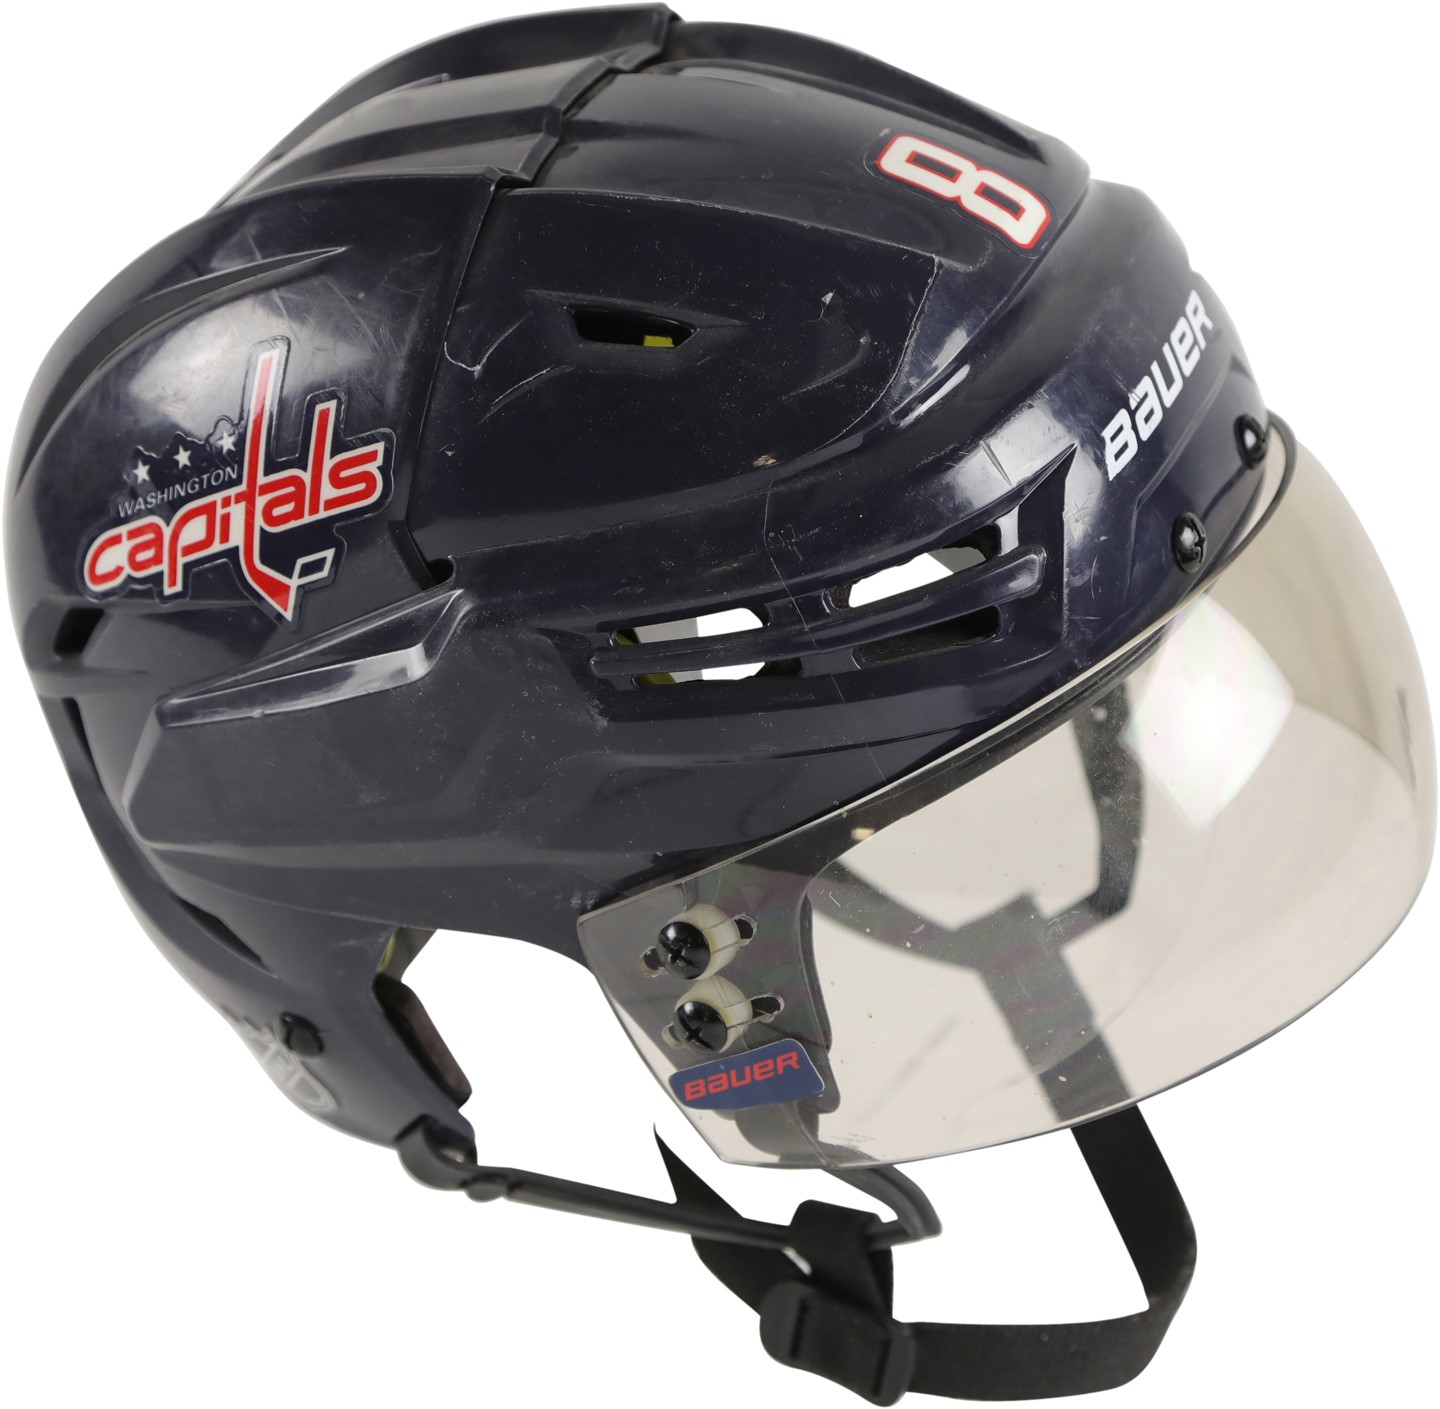 Hockey - Alex Ovechkin Washington Capitals Game Worn Helmet (MeiGray)